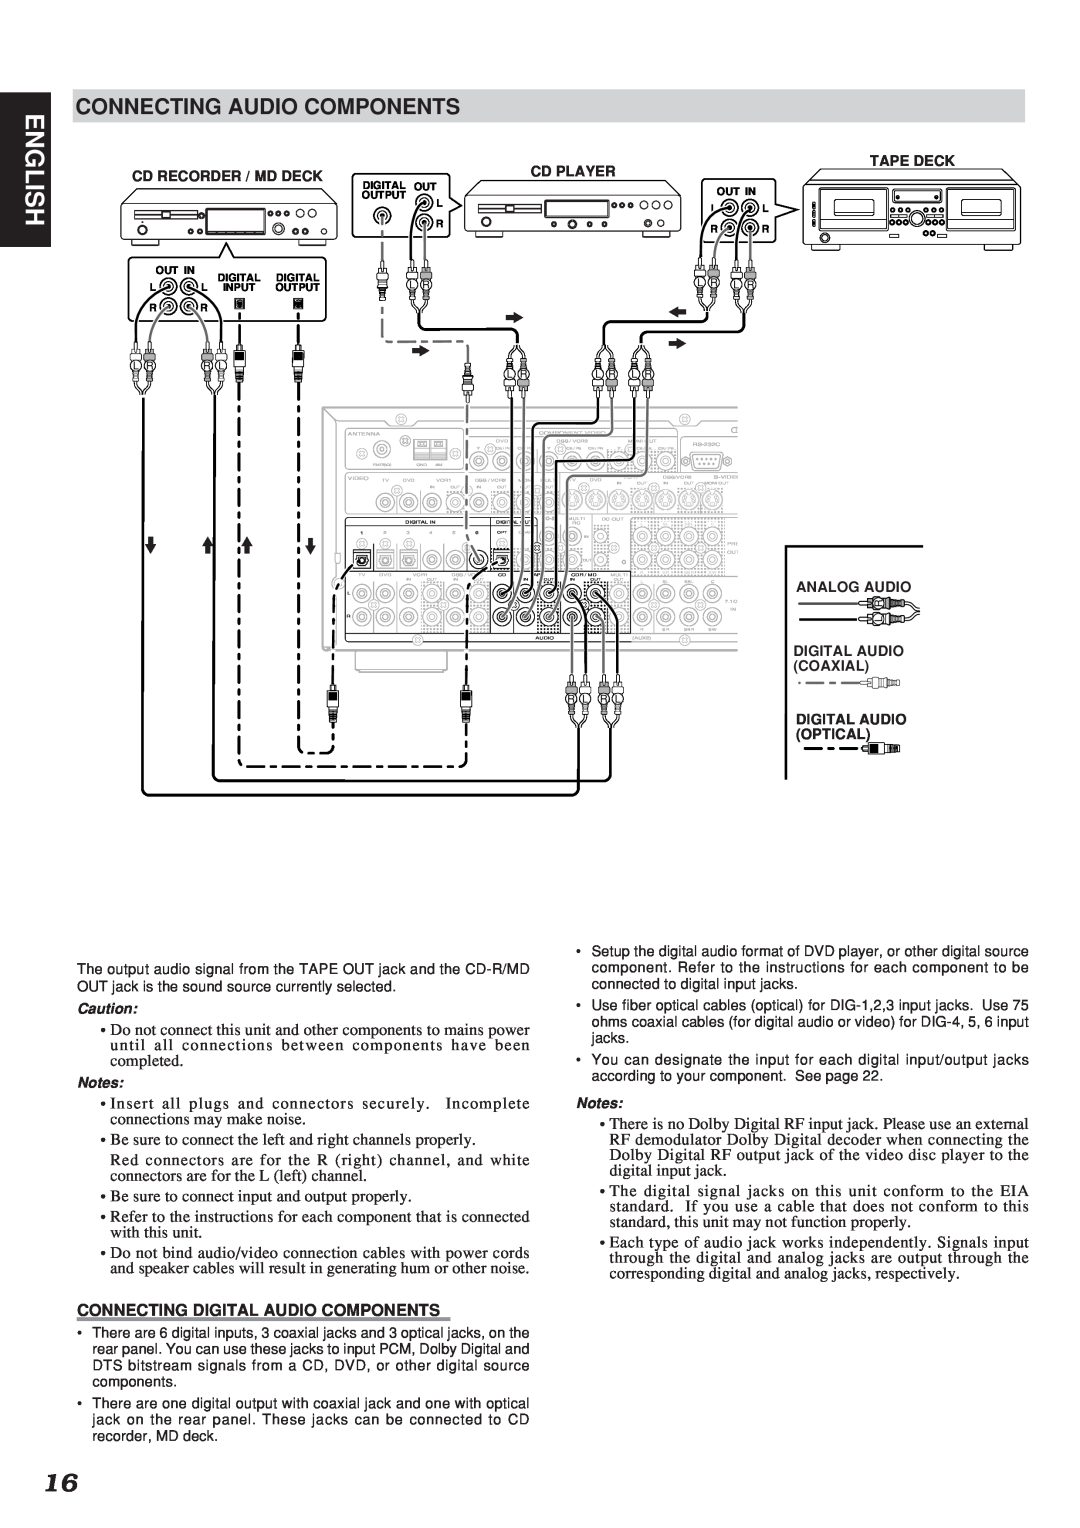 Marantz SR7300OSE manual English, Connecting Audio Components, Connecting Digital Audio Components 